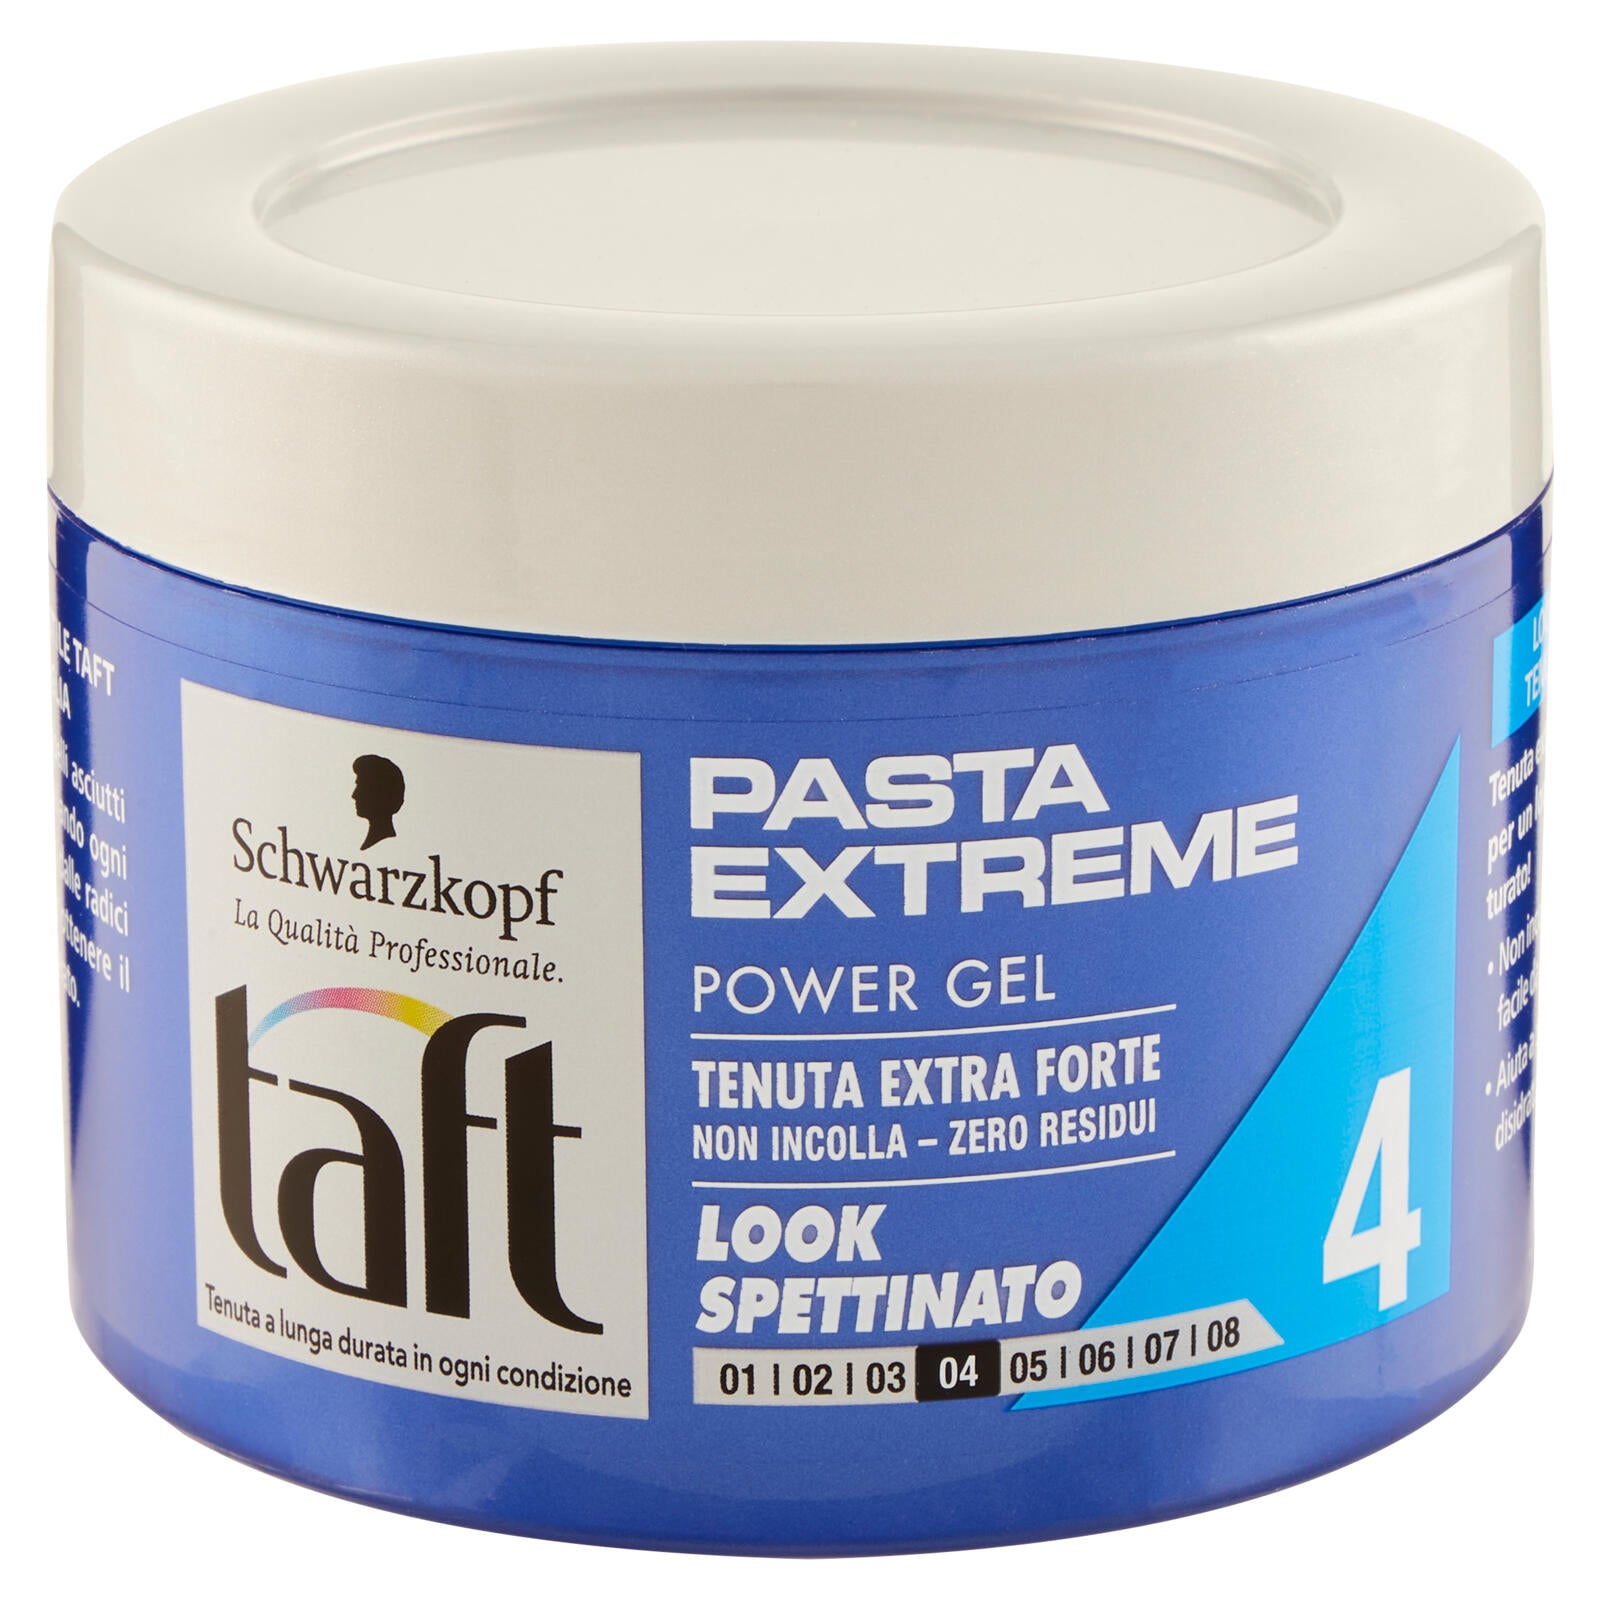 taft Pasta Extreme Power Gel 200 ml